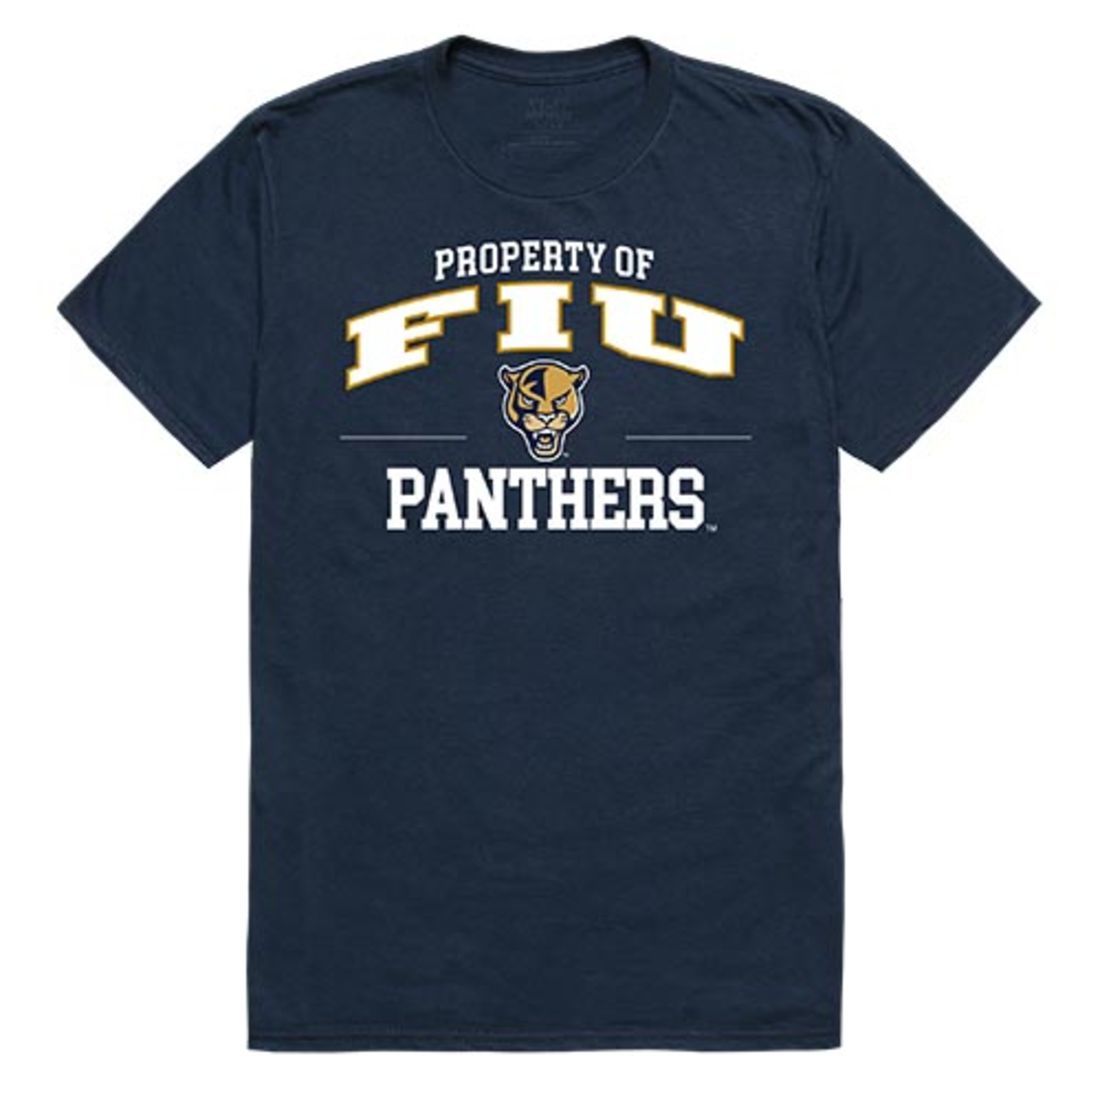 FIU Florida International University Panthers Property T-Shirt Navy-Campus-Wardrobe